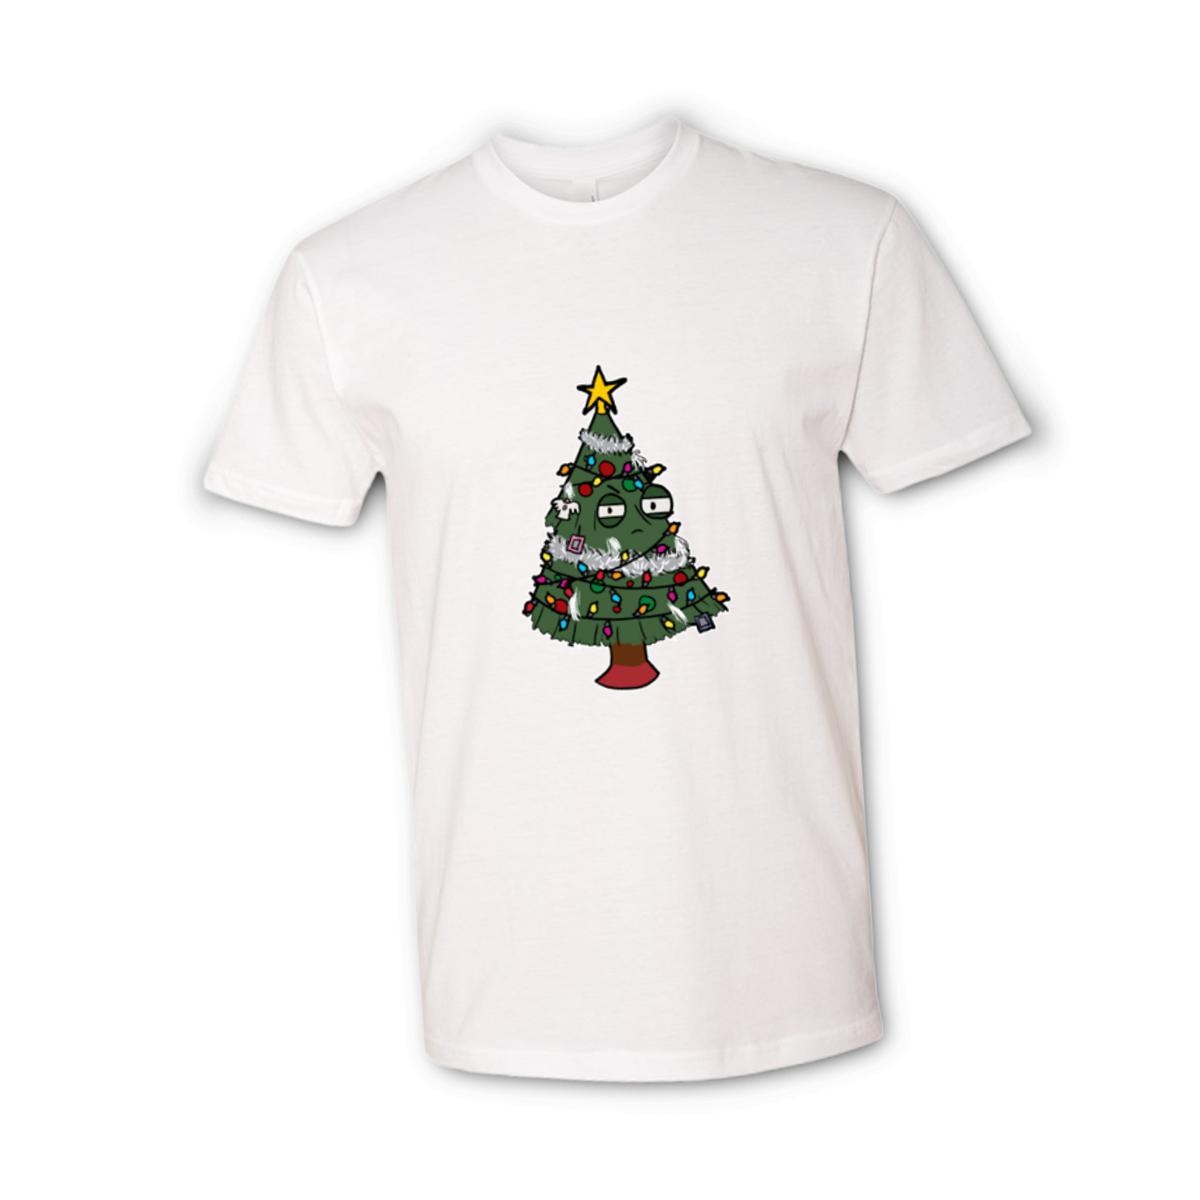 Gaudy Christmas Tree Unisex Tee Small white